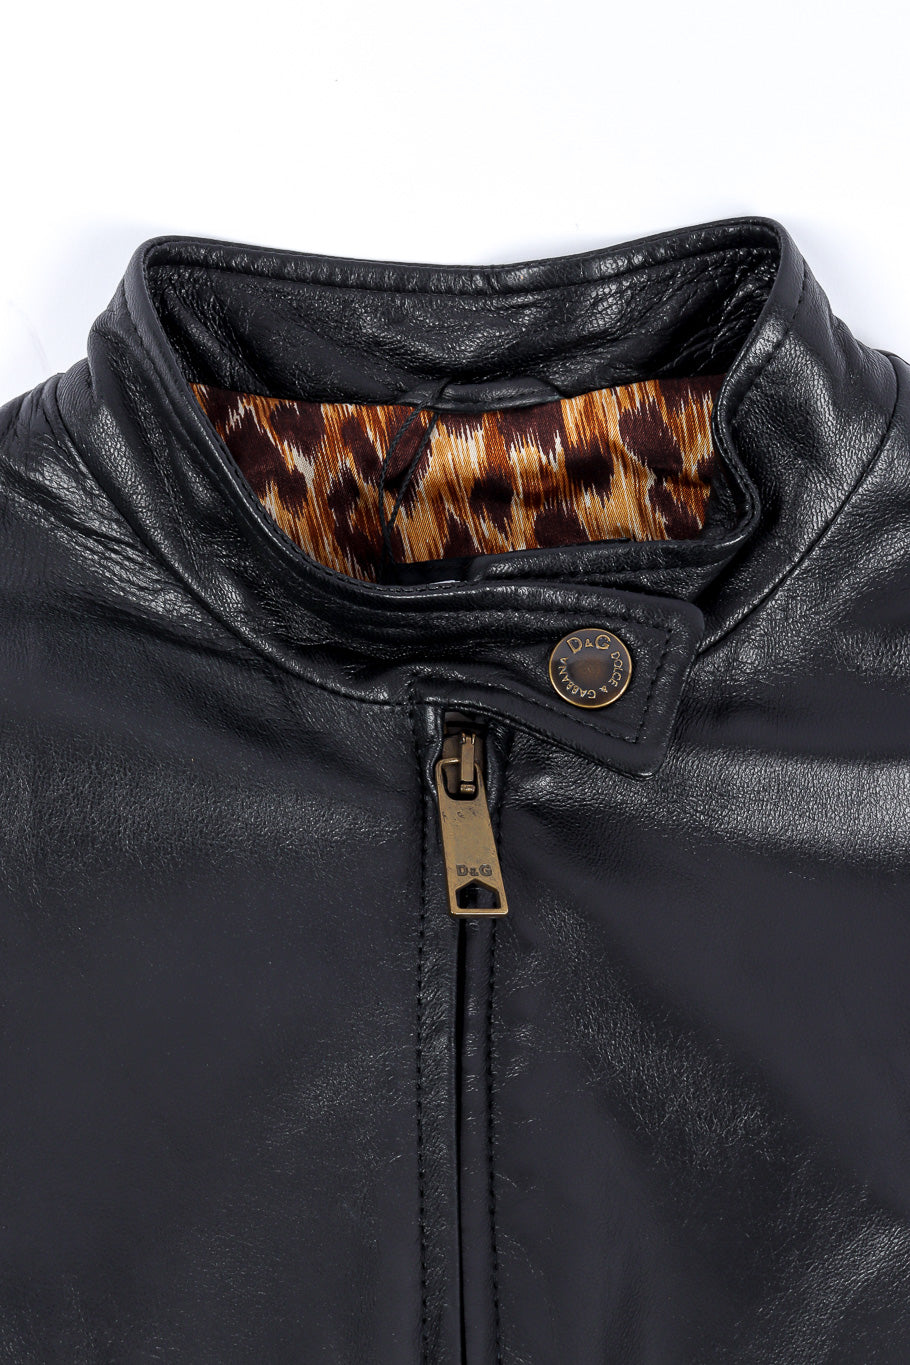 Dolce & Gabbana leather panther jacket collar button @recessla